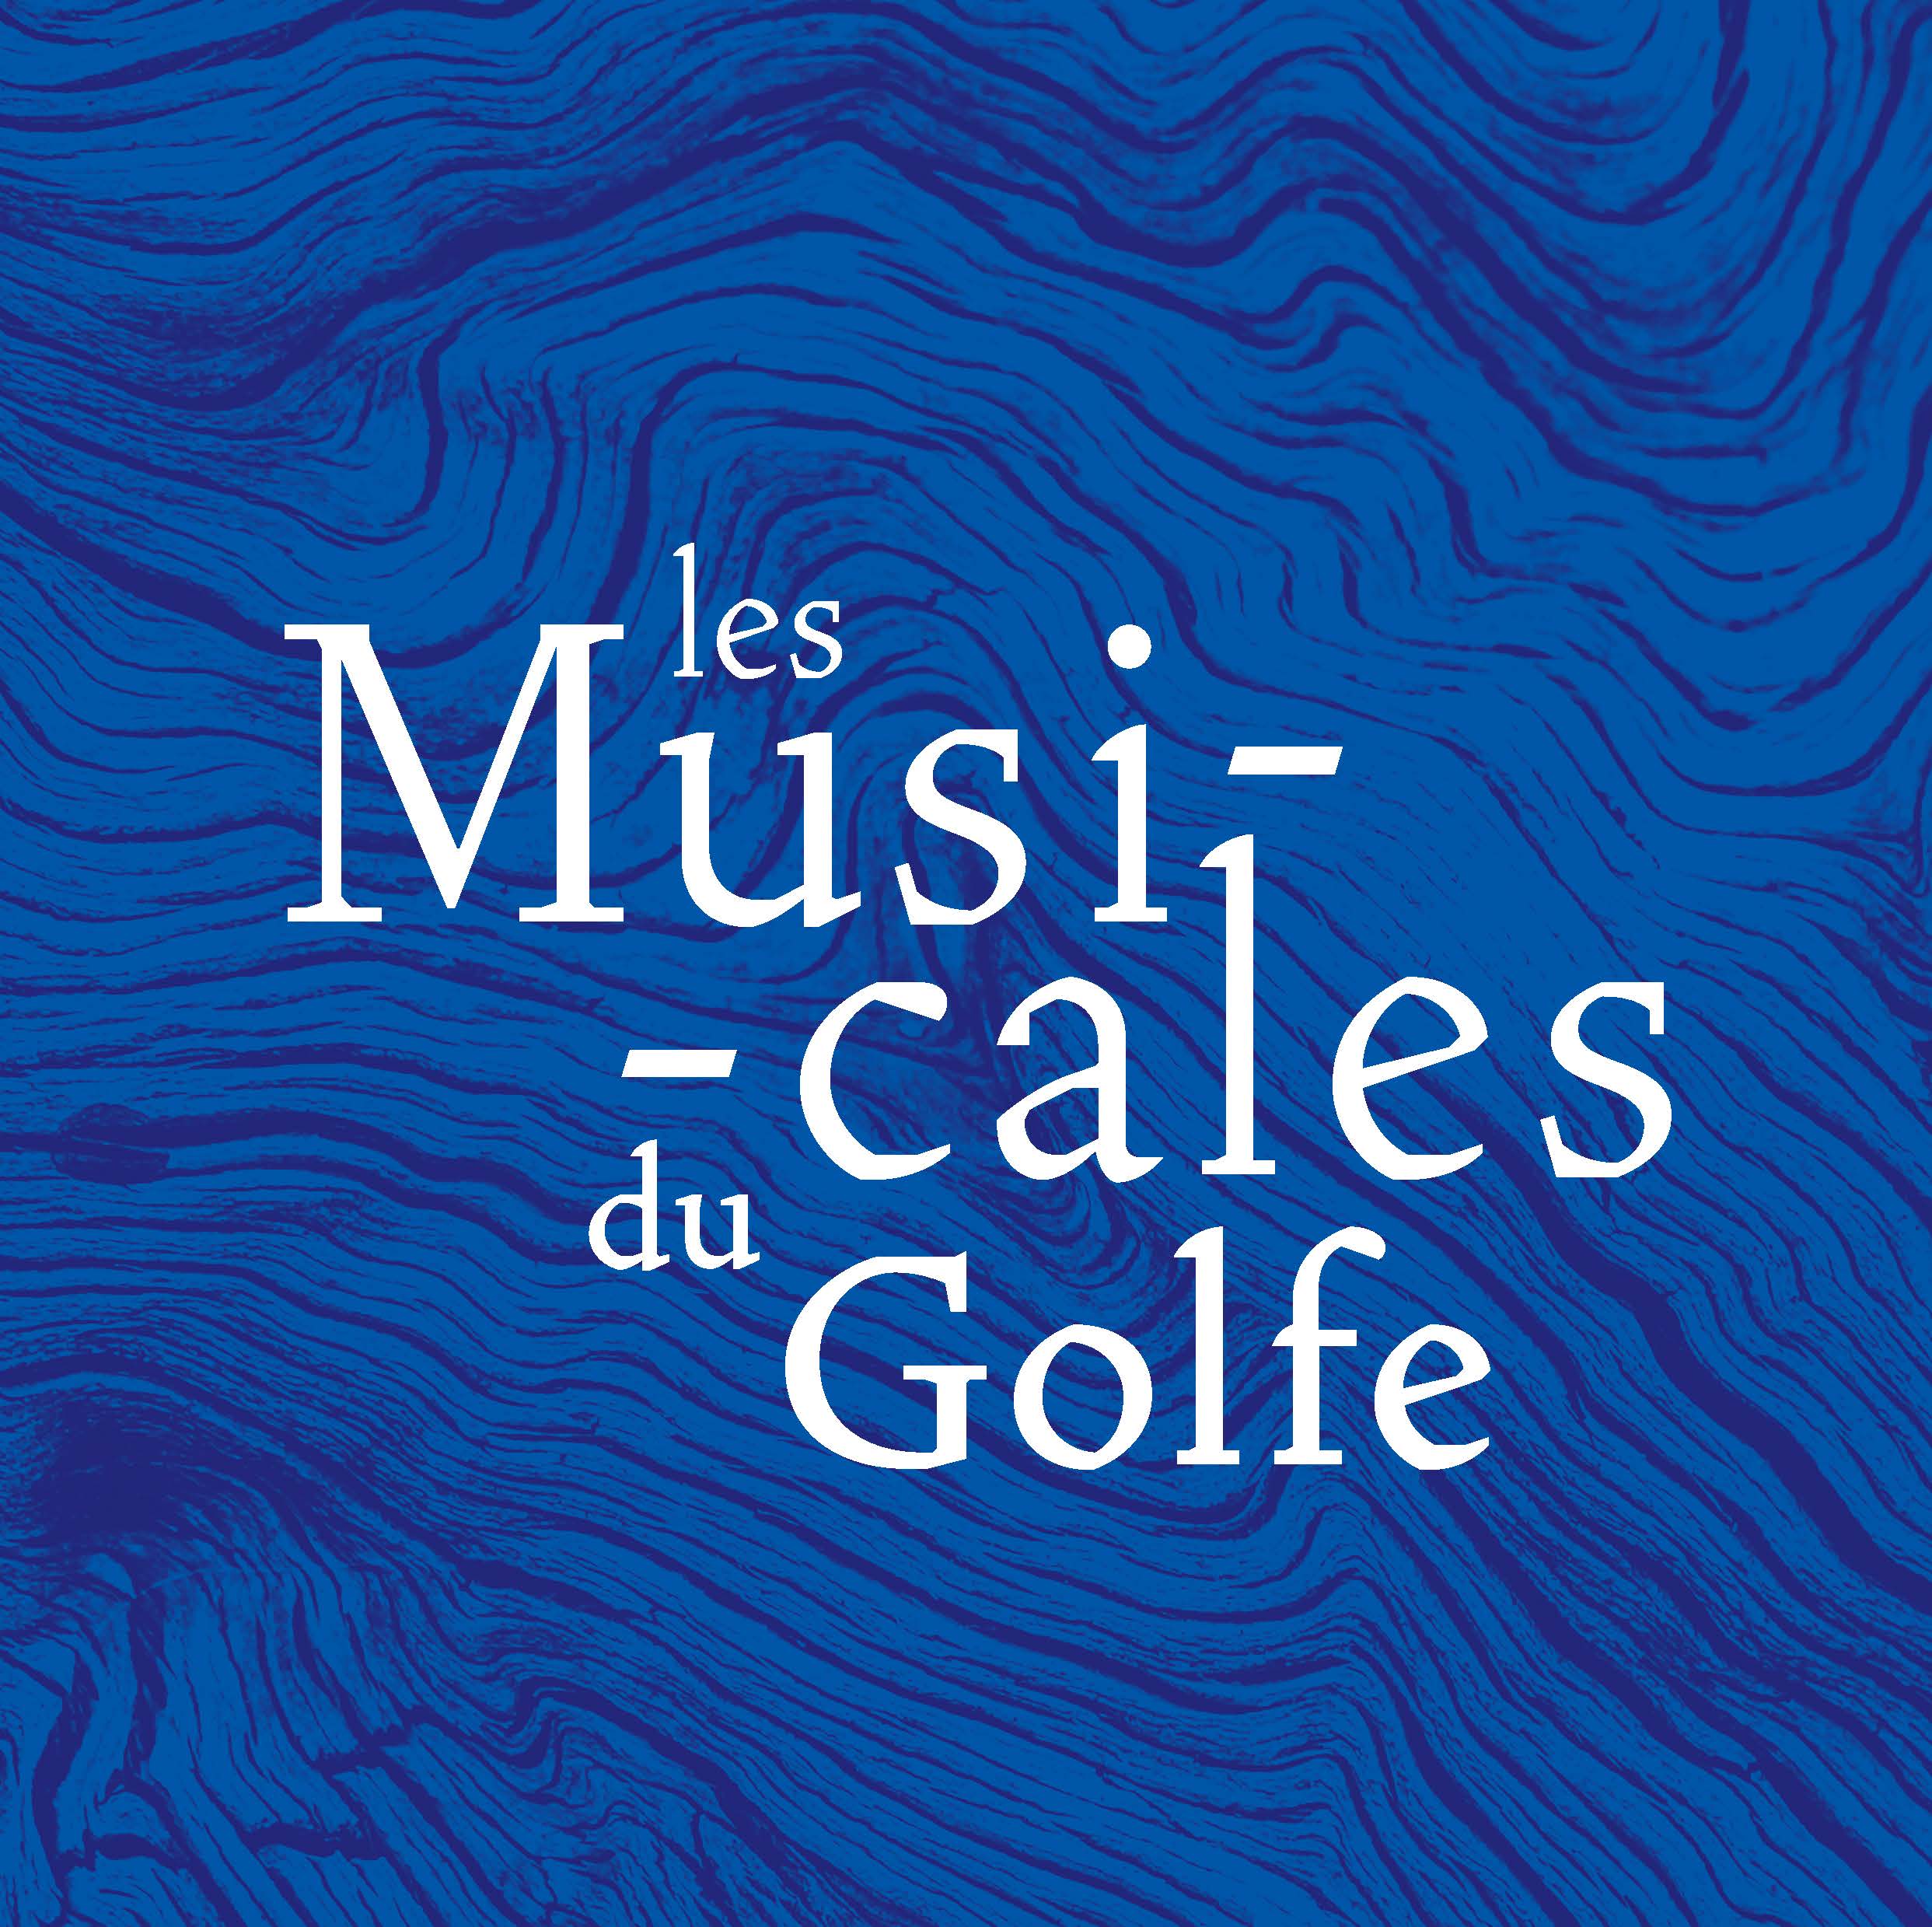 Logo : LES MUSICALES DU GOLFE